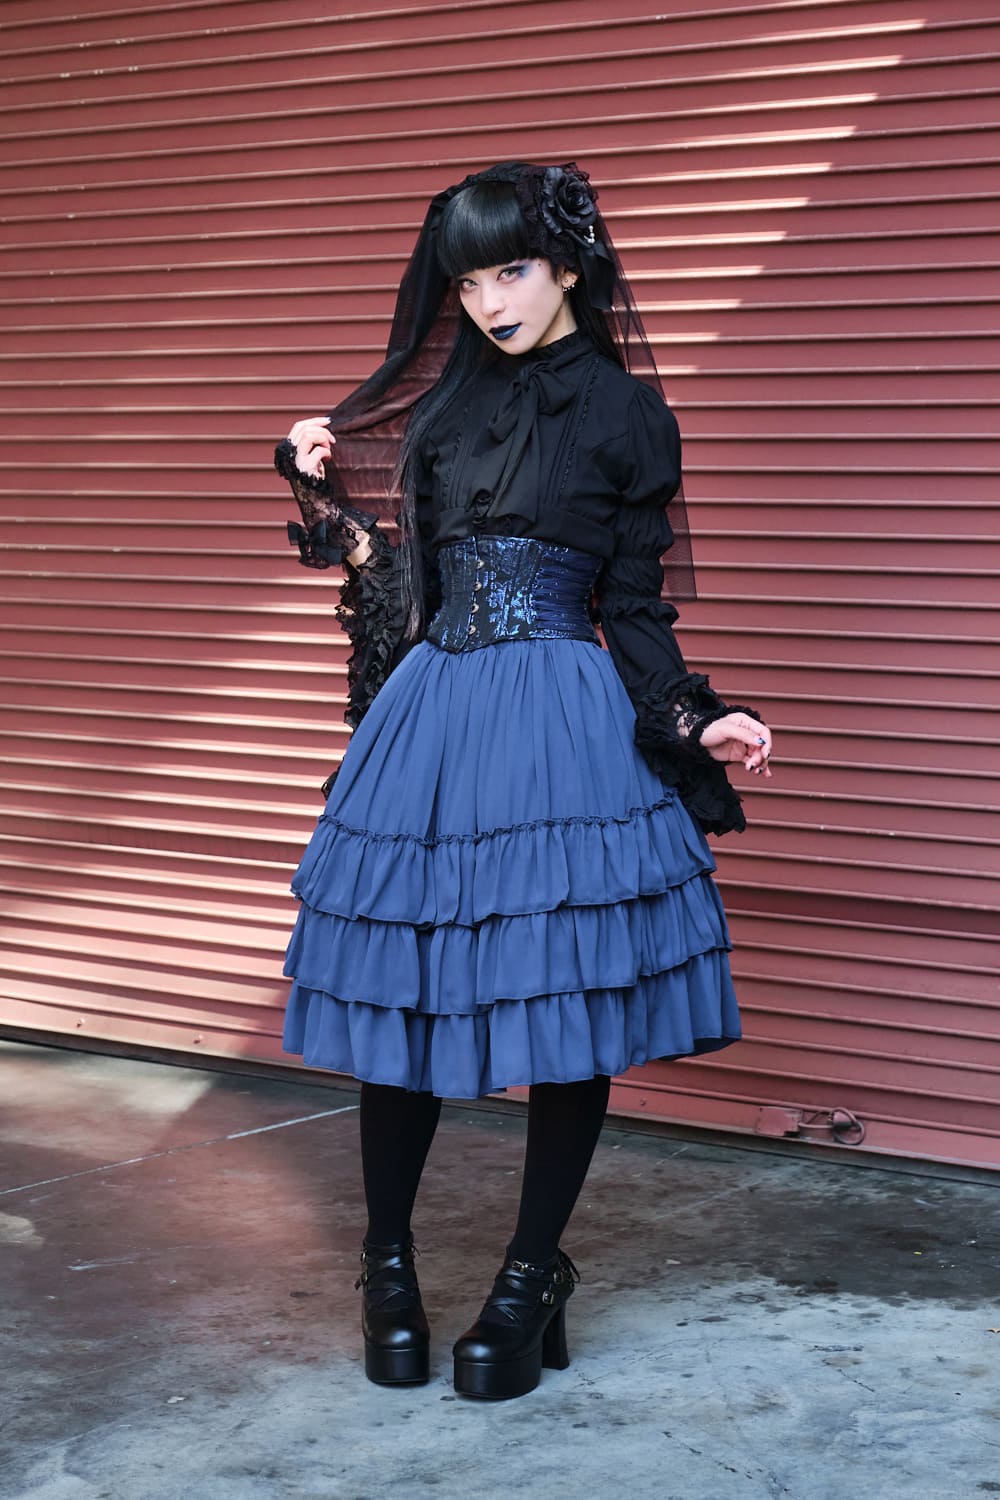 Atelier Pierrot gothic lolita model wearing black blouse, blue corset and skirt - full body standing pose 5.